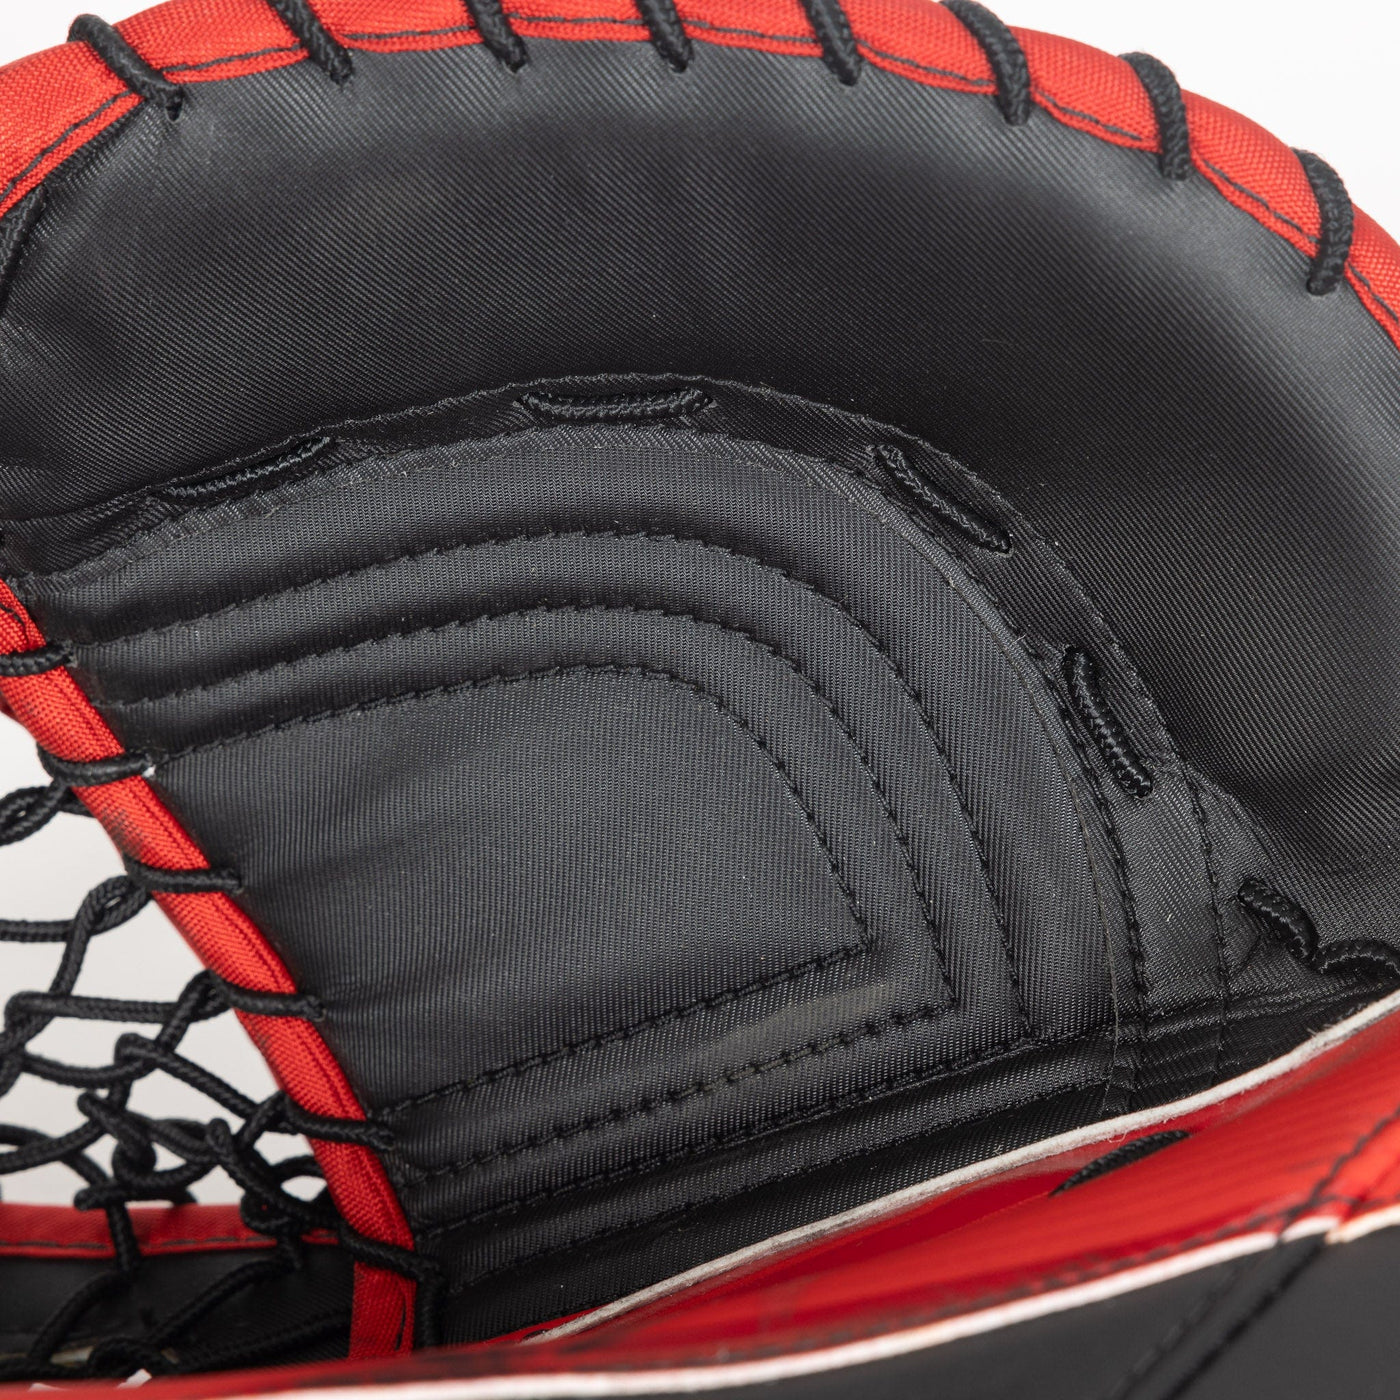 CCM Axis 2 Senior Goalie Glove Set - USED #3 Black / Red (590° Catcher) - TheHockeyShop.com